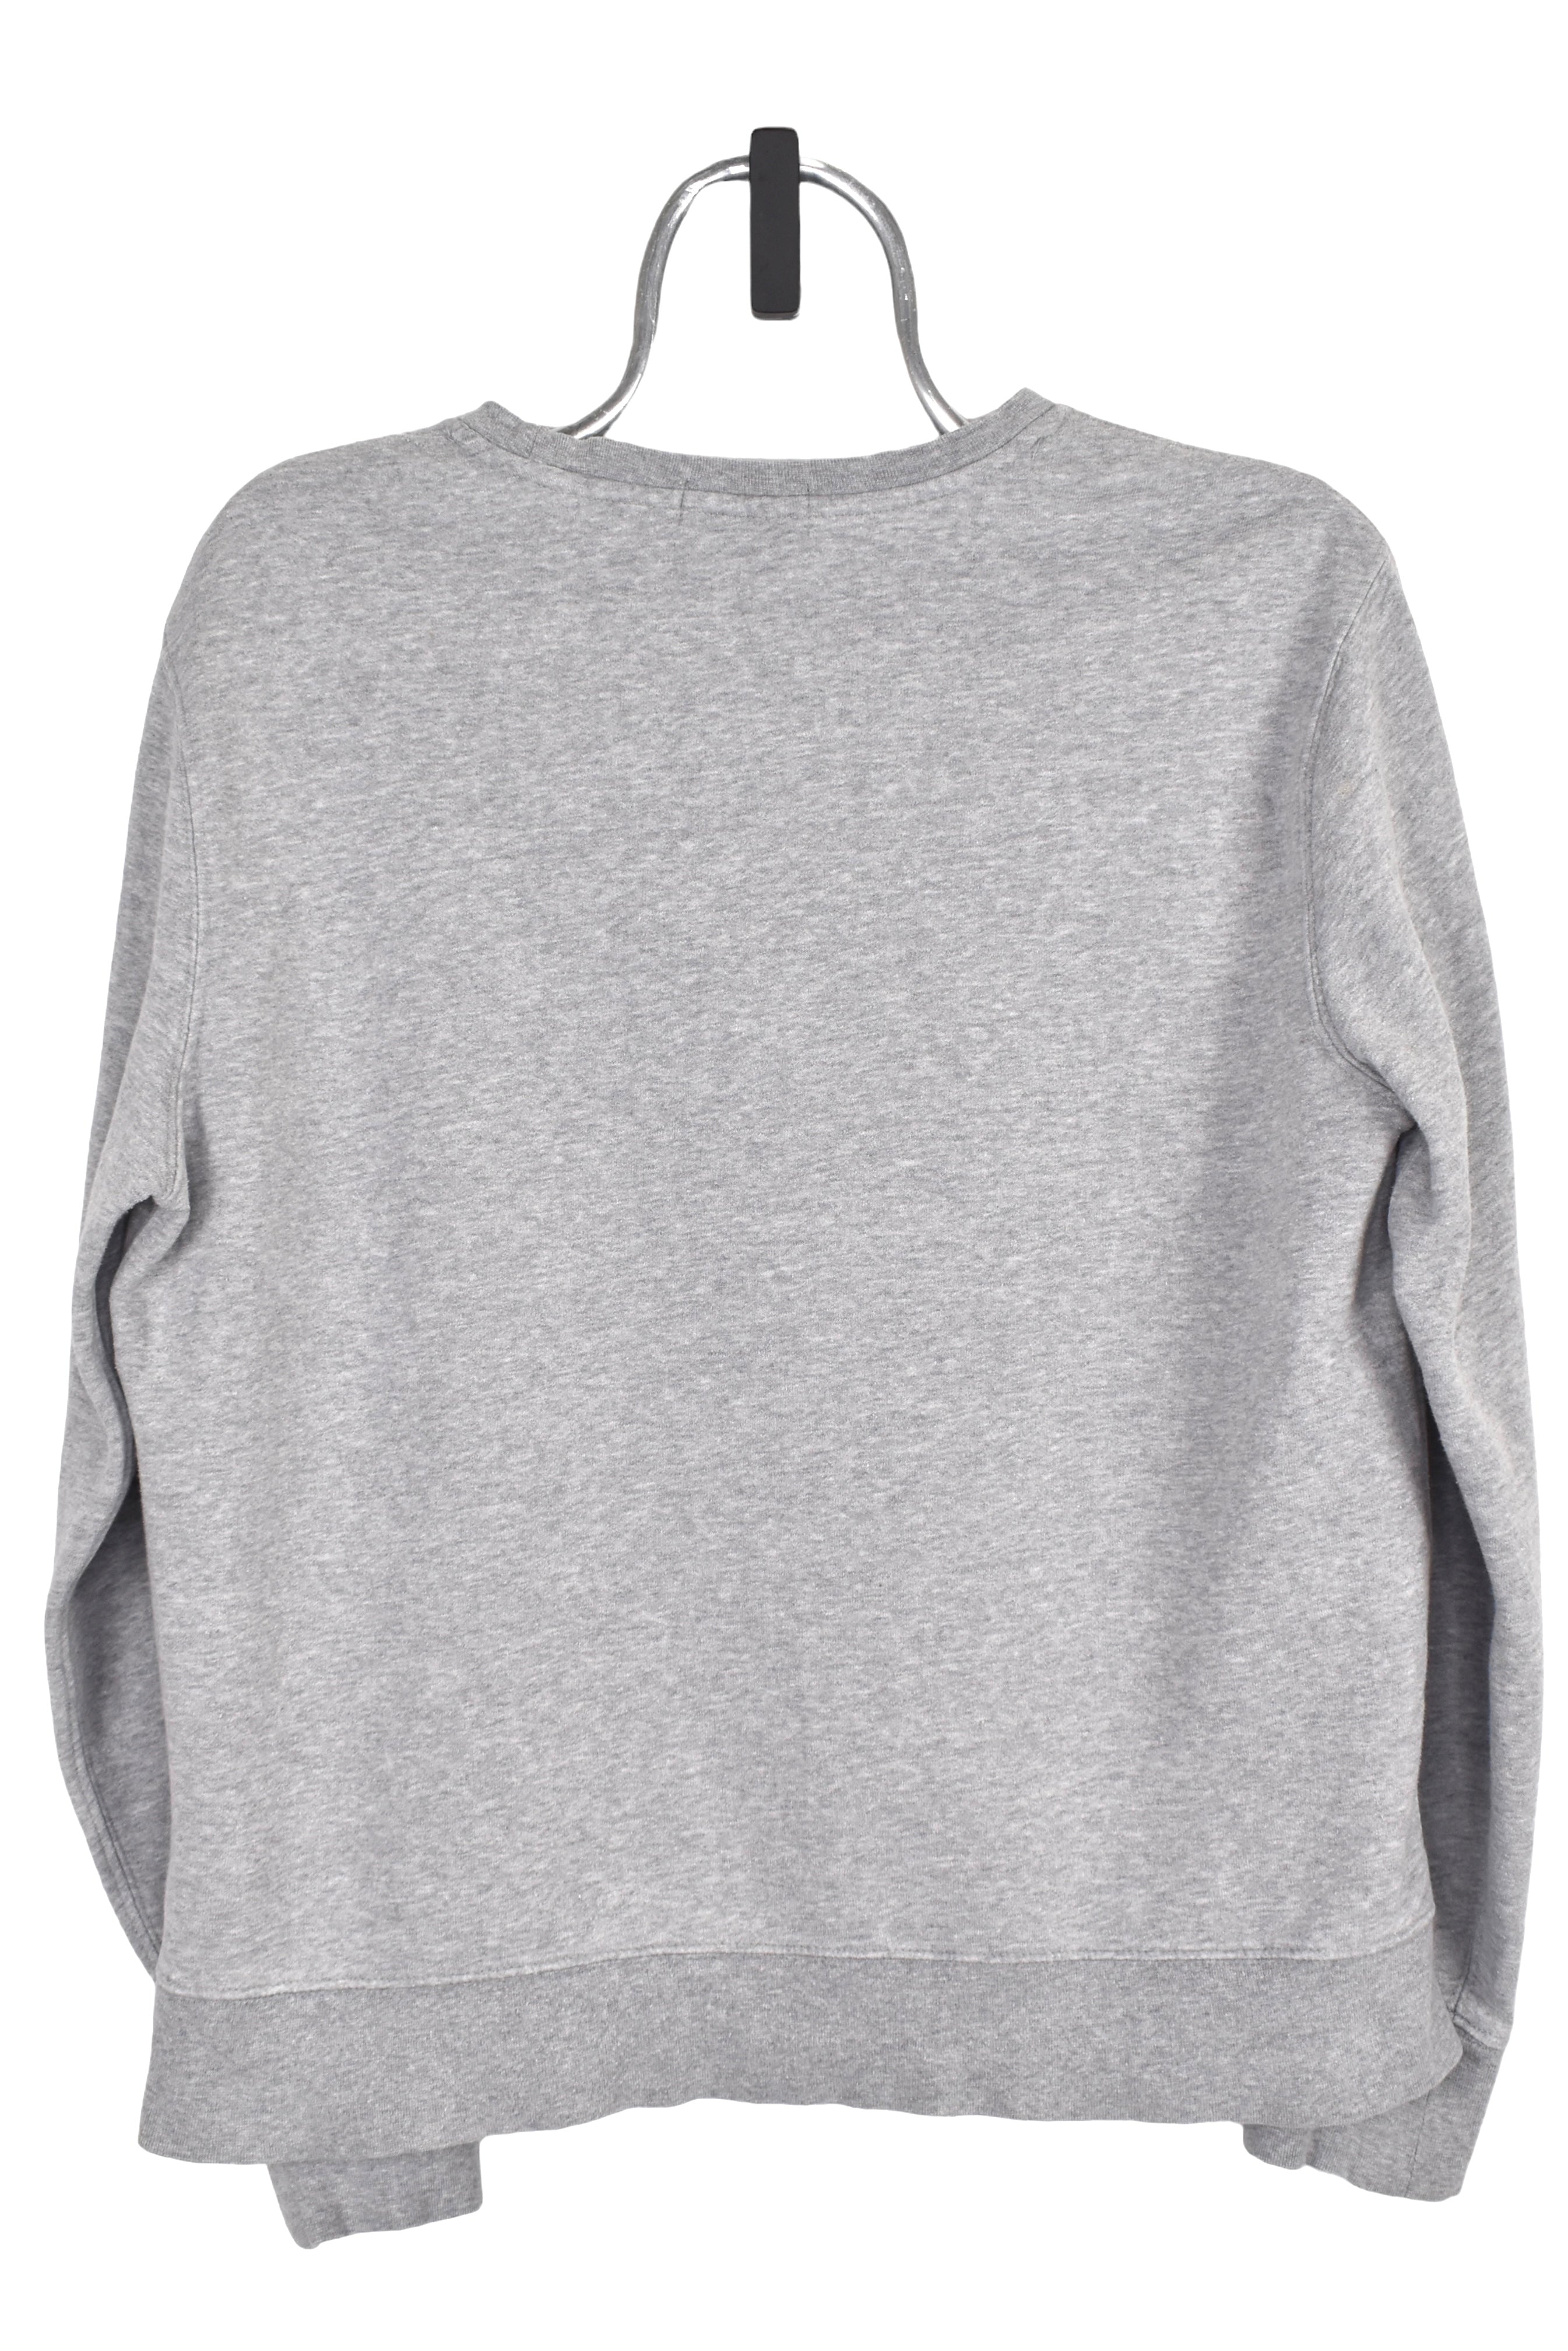 Vintage Ralph Lauren sweatshirt (M), grey Polo Bear crewneck